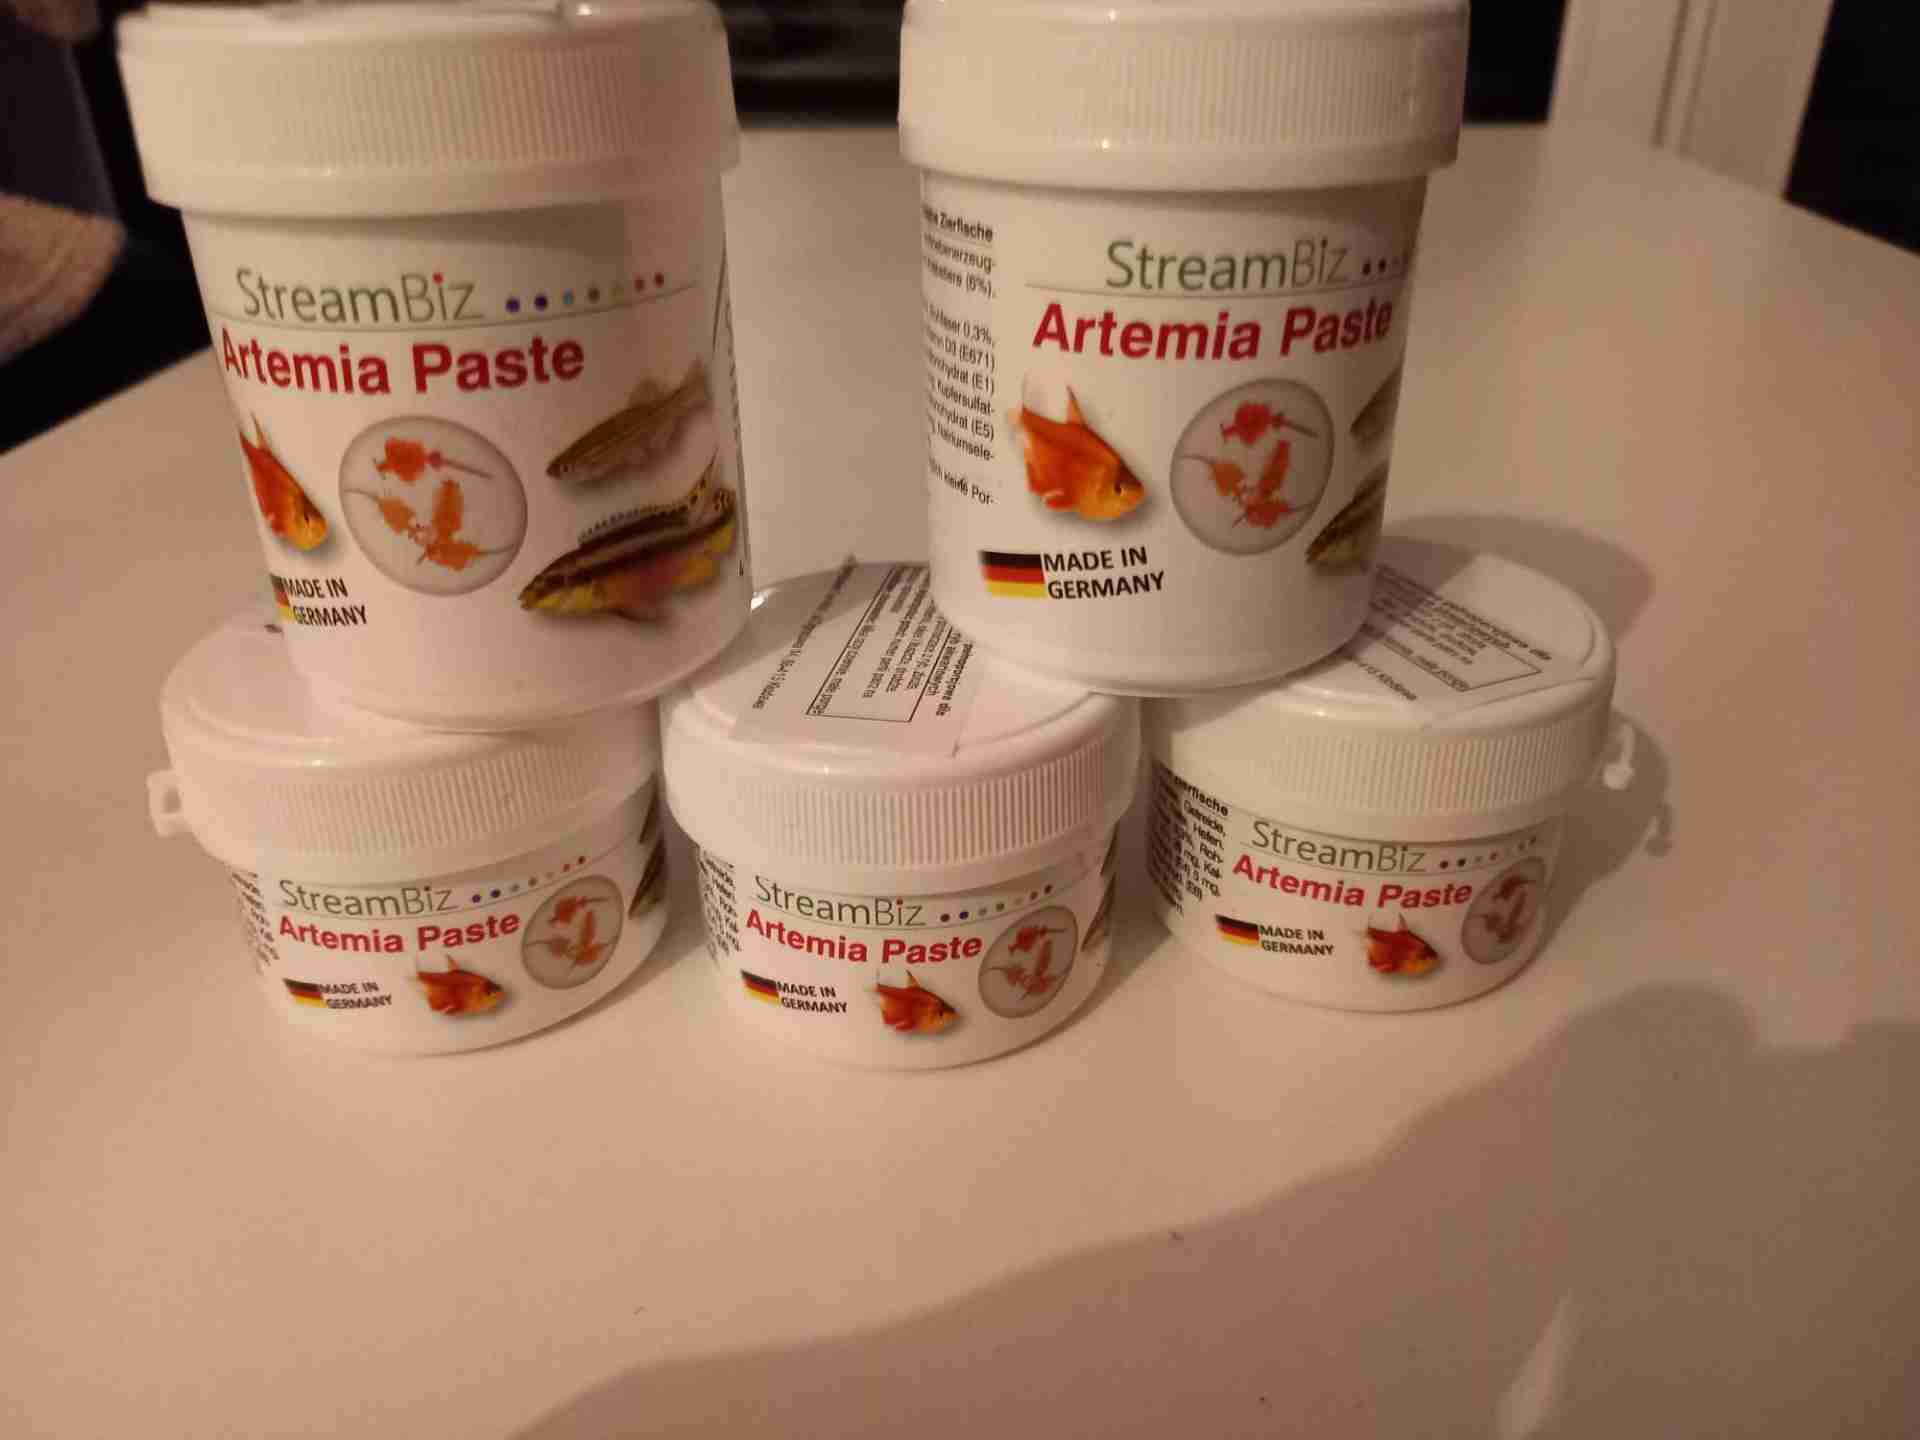 Pasta Artemia - Pasta Artemii | StreamBiz